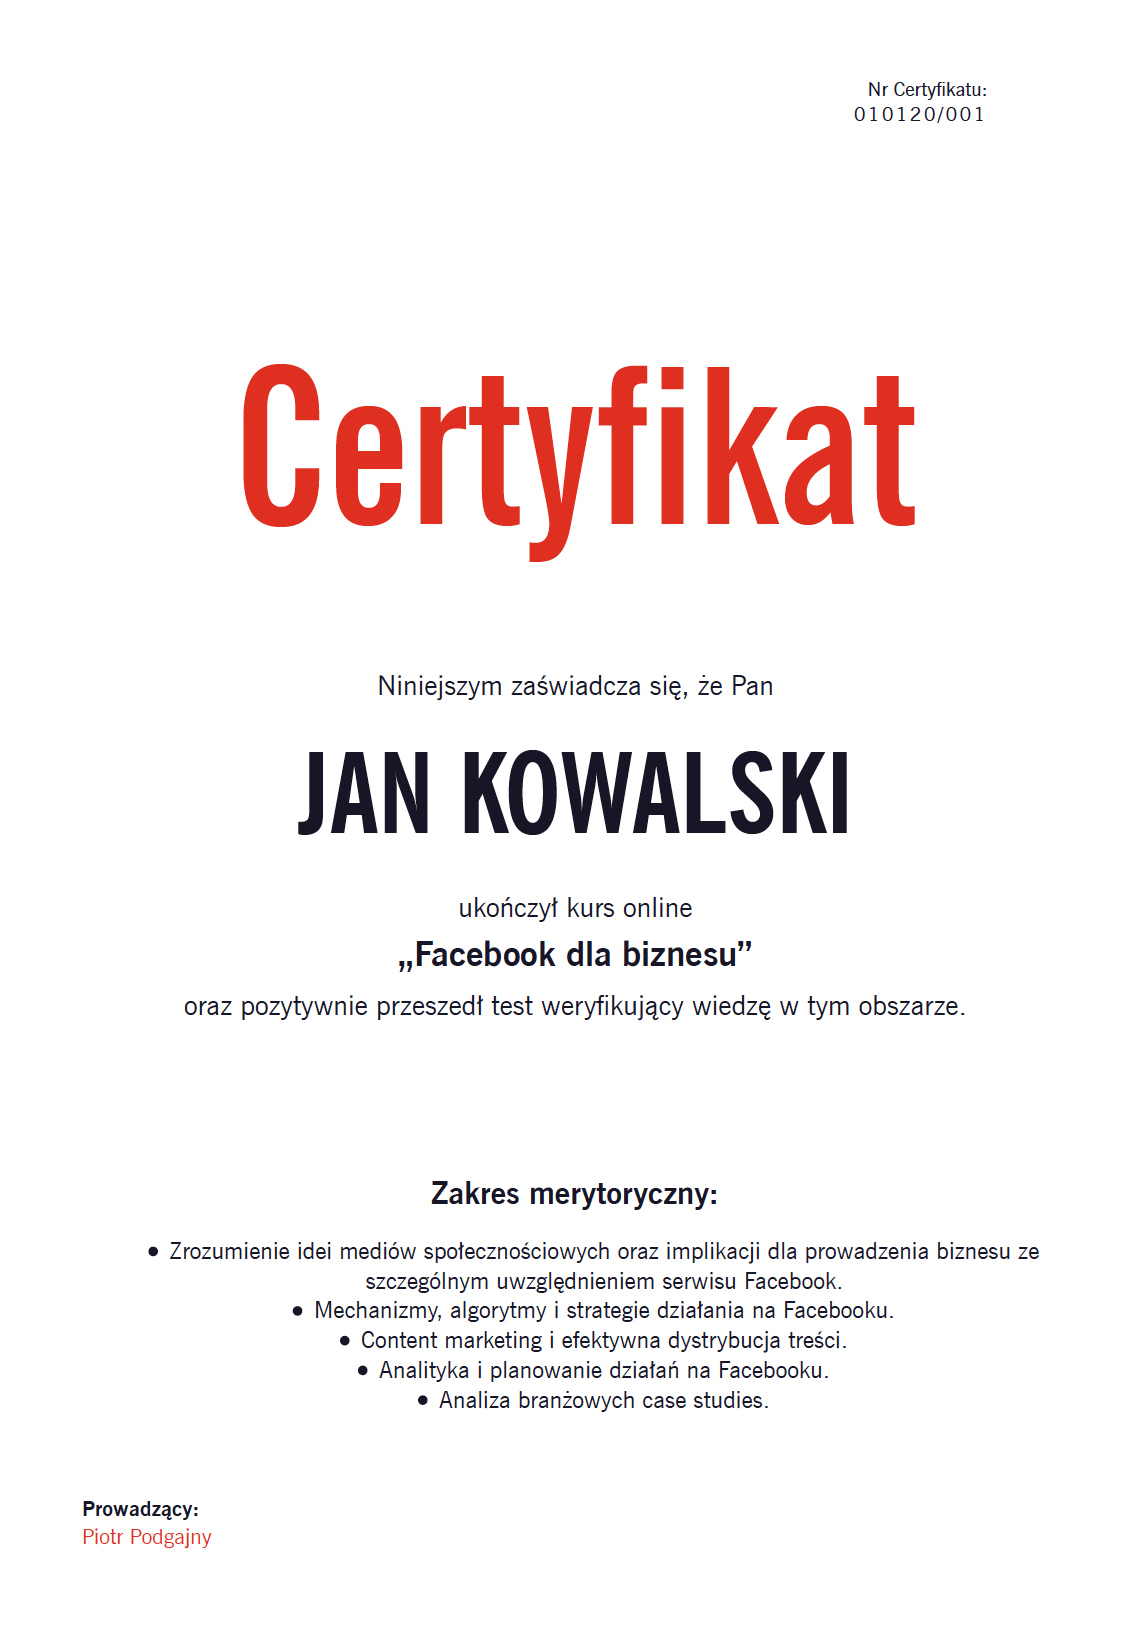 Facebook marketing kurs online - certyfikat